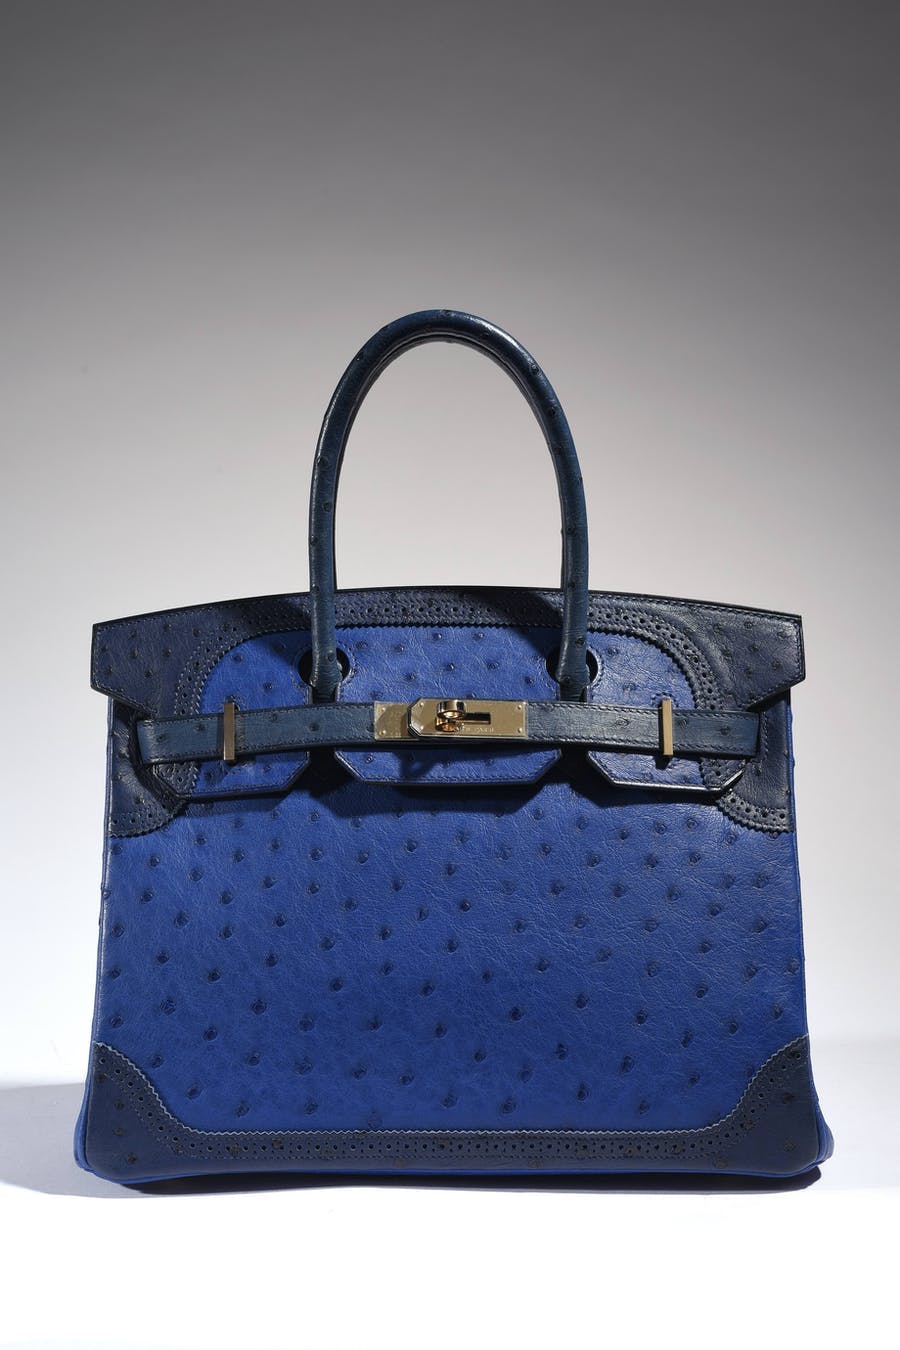 Hermès, exceptional “Birkin Ghillies” bag 30 cm Iris Blue, Malta Blue and Sapphire Blue, limited edition, 2014, image © HVMC